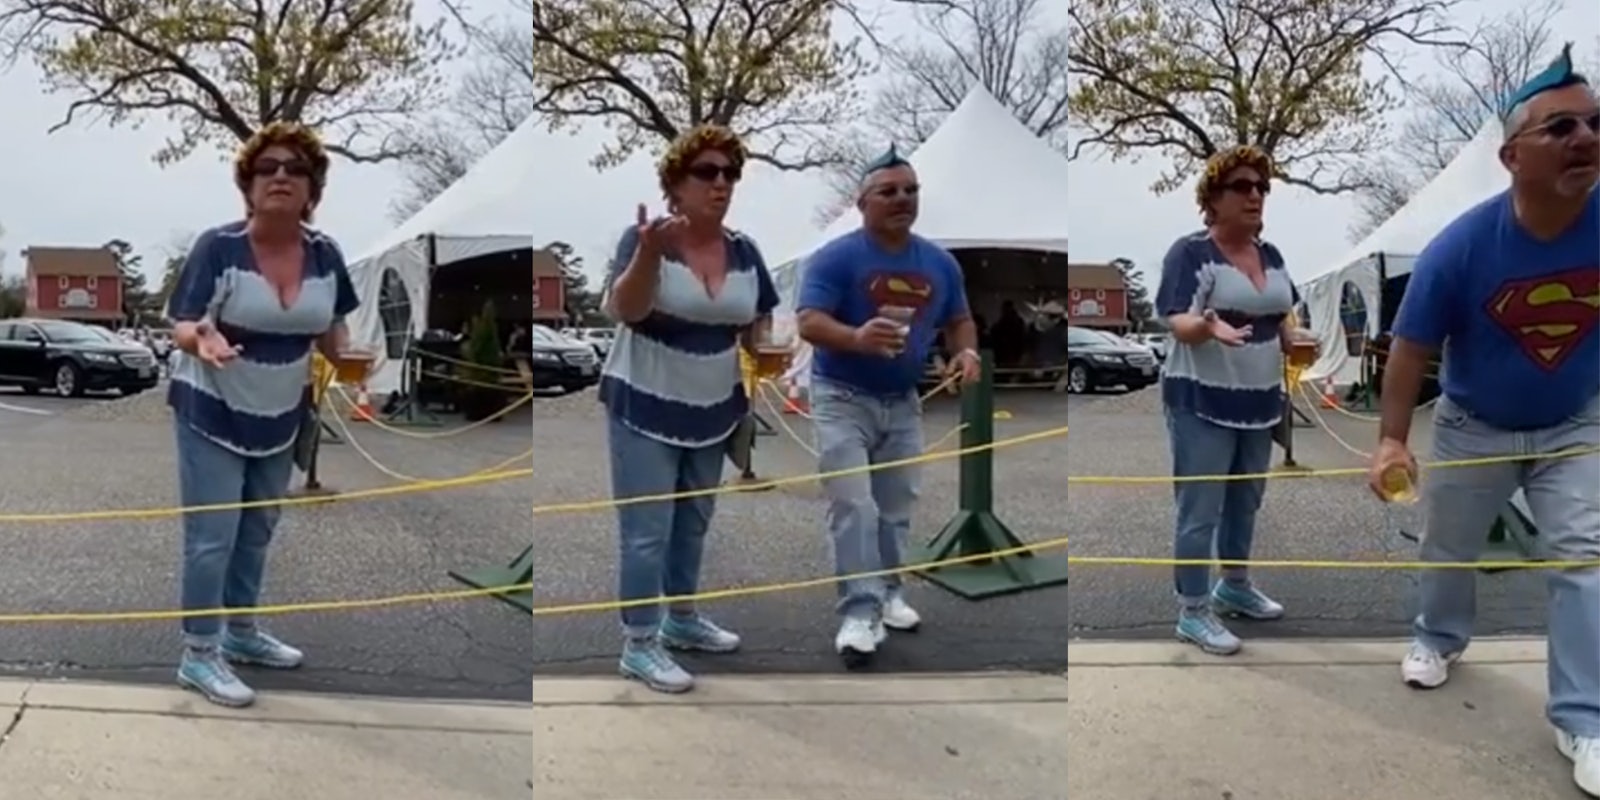 man walks up behind woman and throws beer at someone off-camera